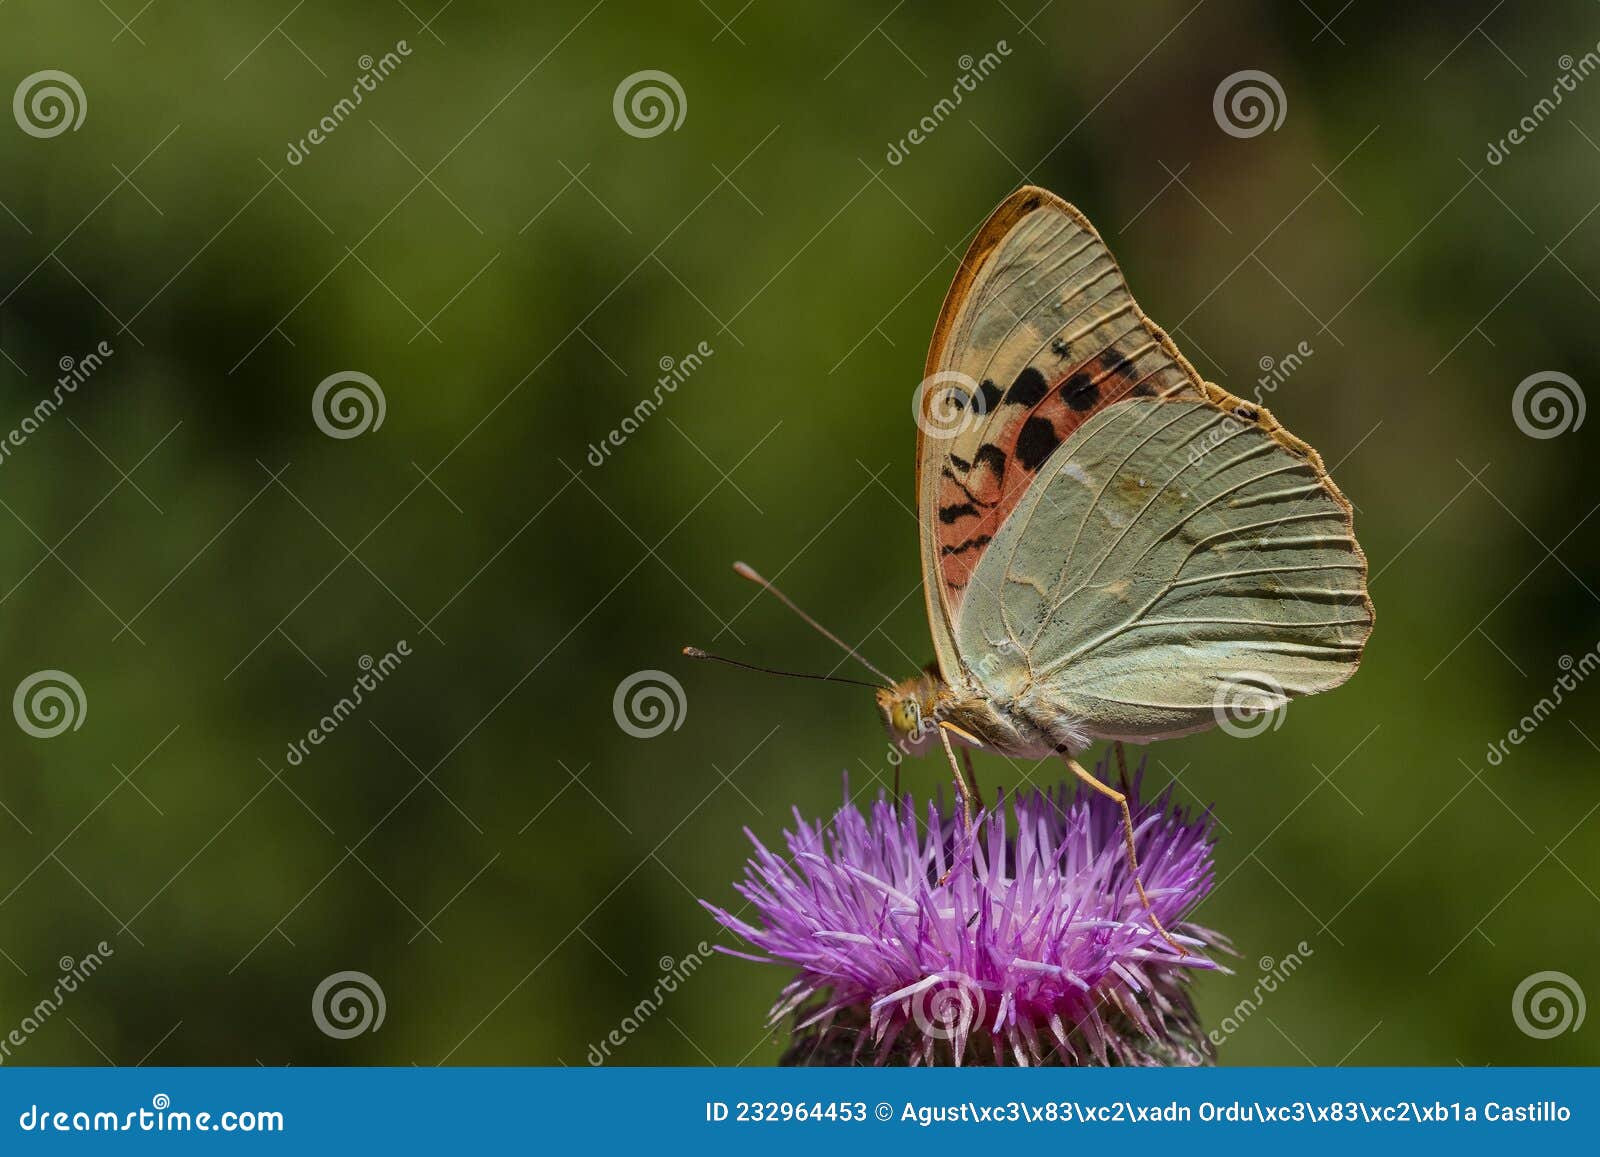 day butterfly perched on flower, argynnis aglaja